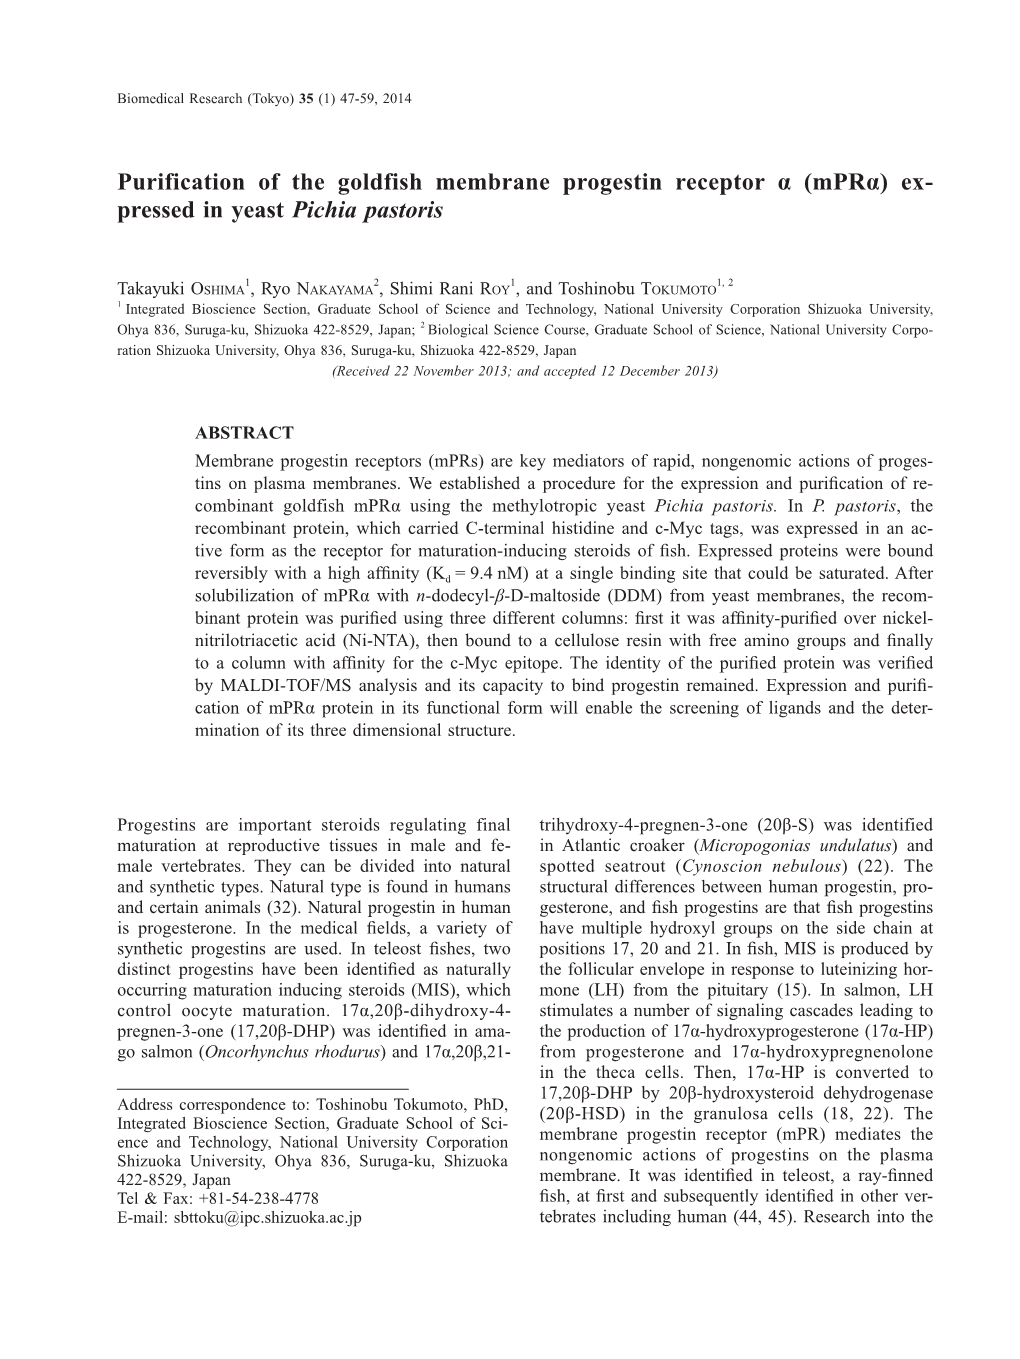 Purification of the Goldfish Membrane Progestin Receptor Α (Mprα) Ex- Pressed in Yeast Pichia Pastoris